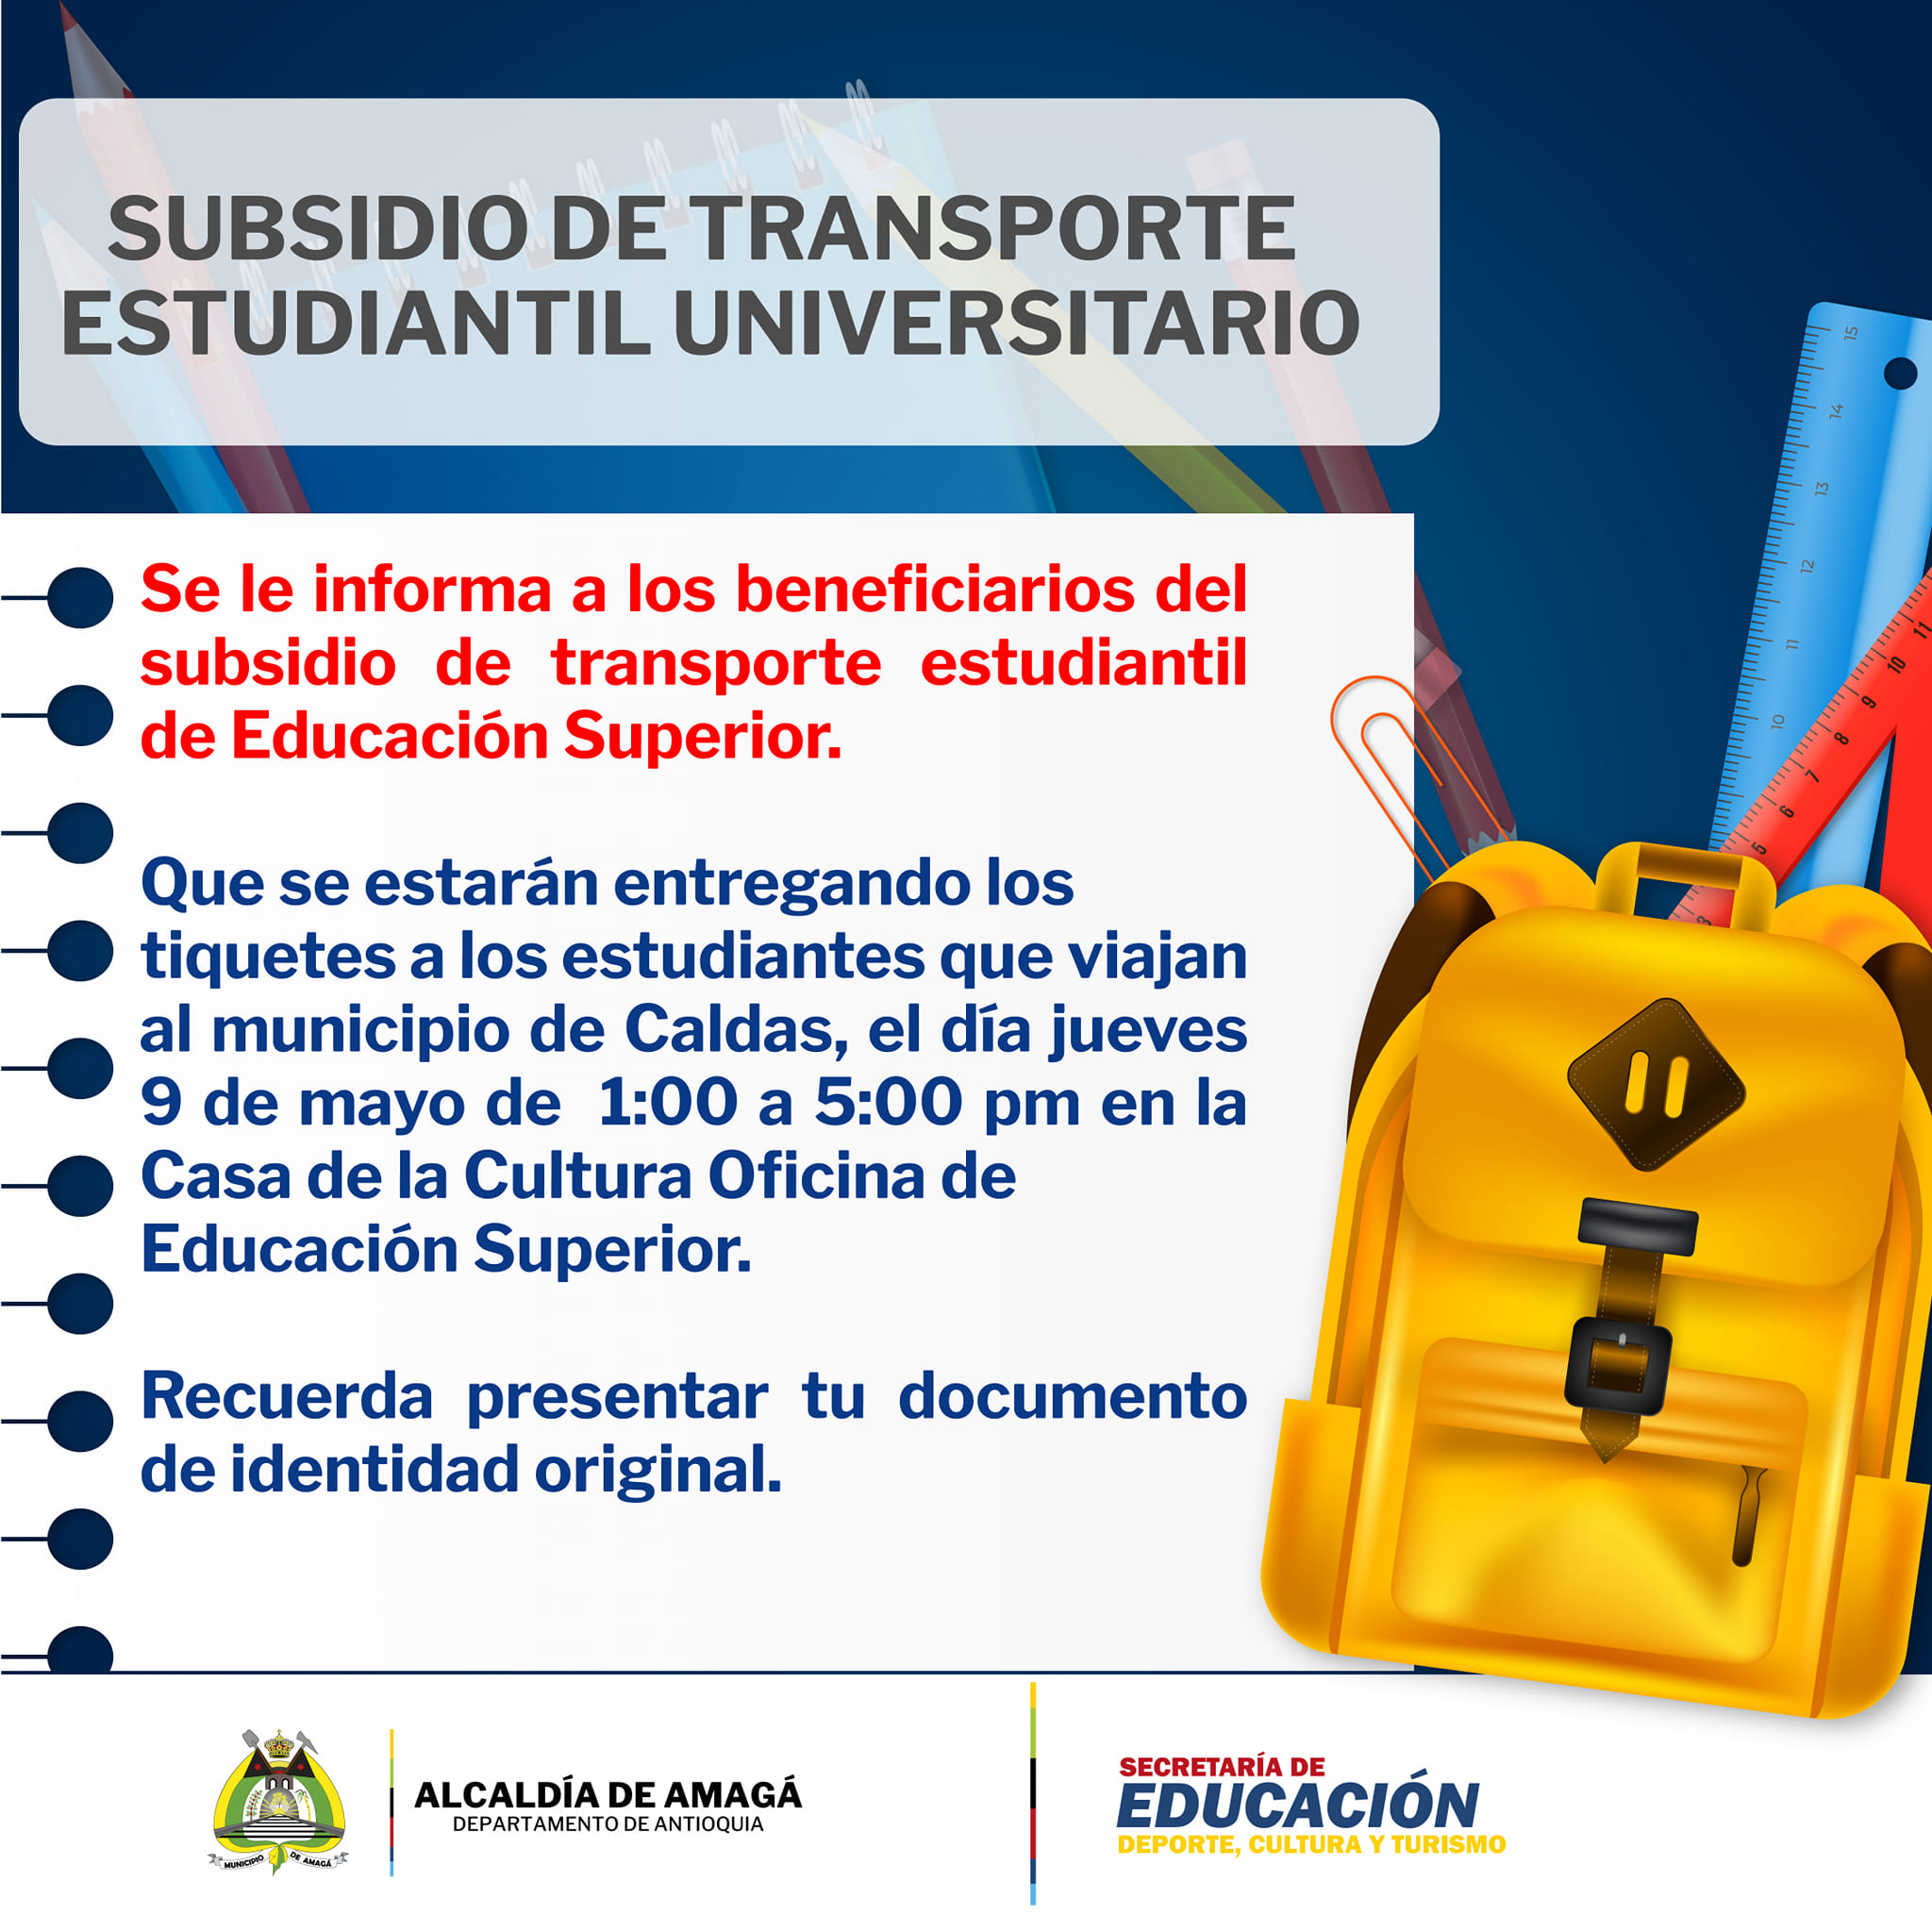 Subsidio de transporte estudiantil universitario